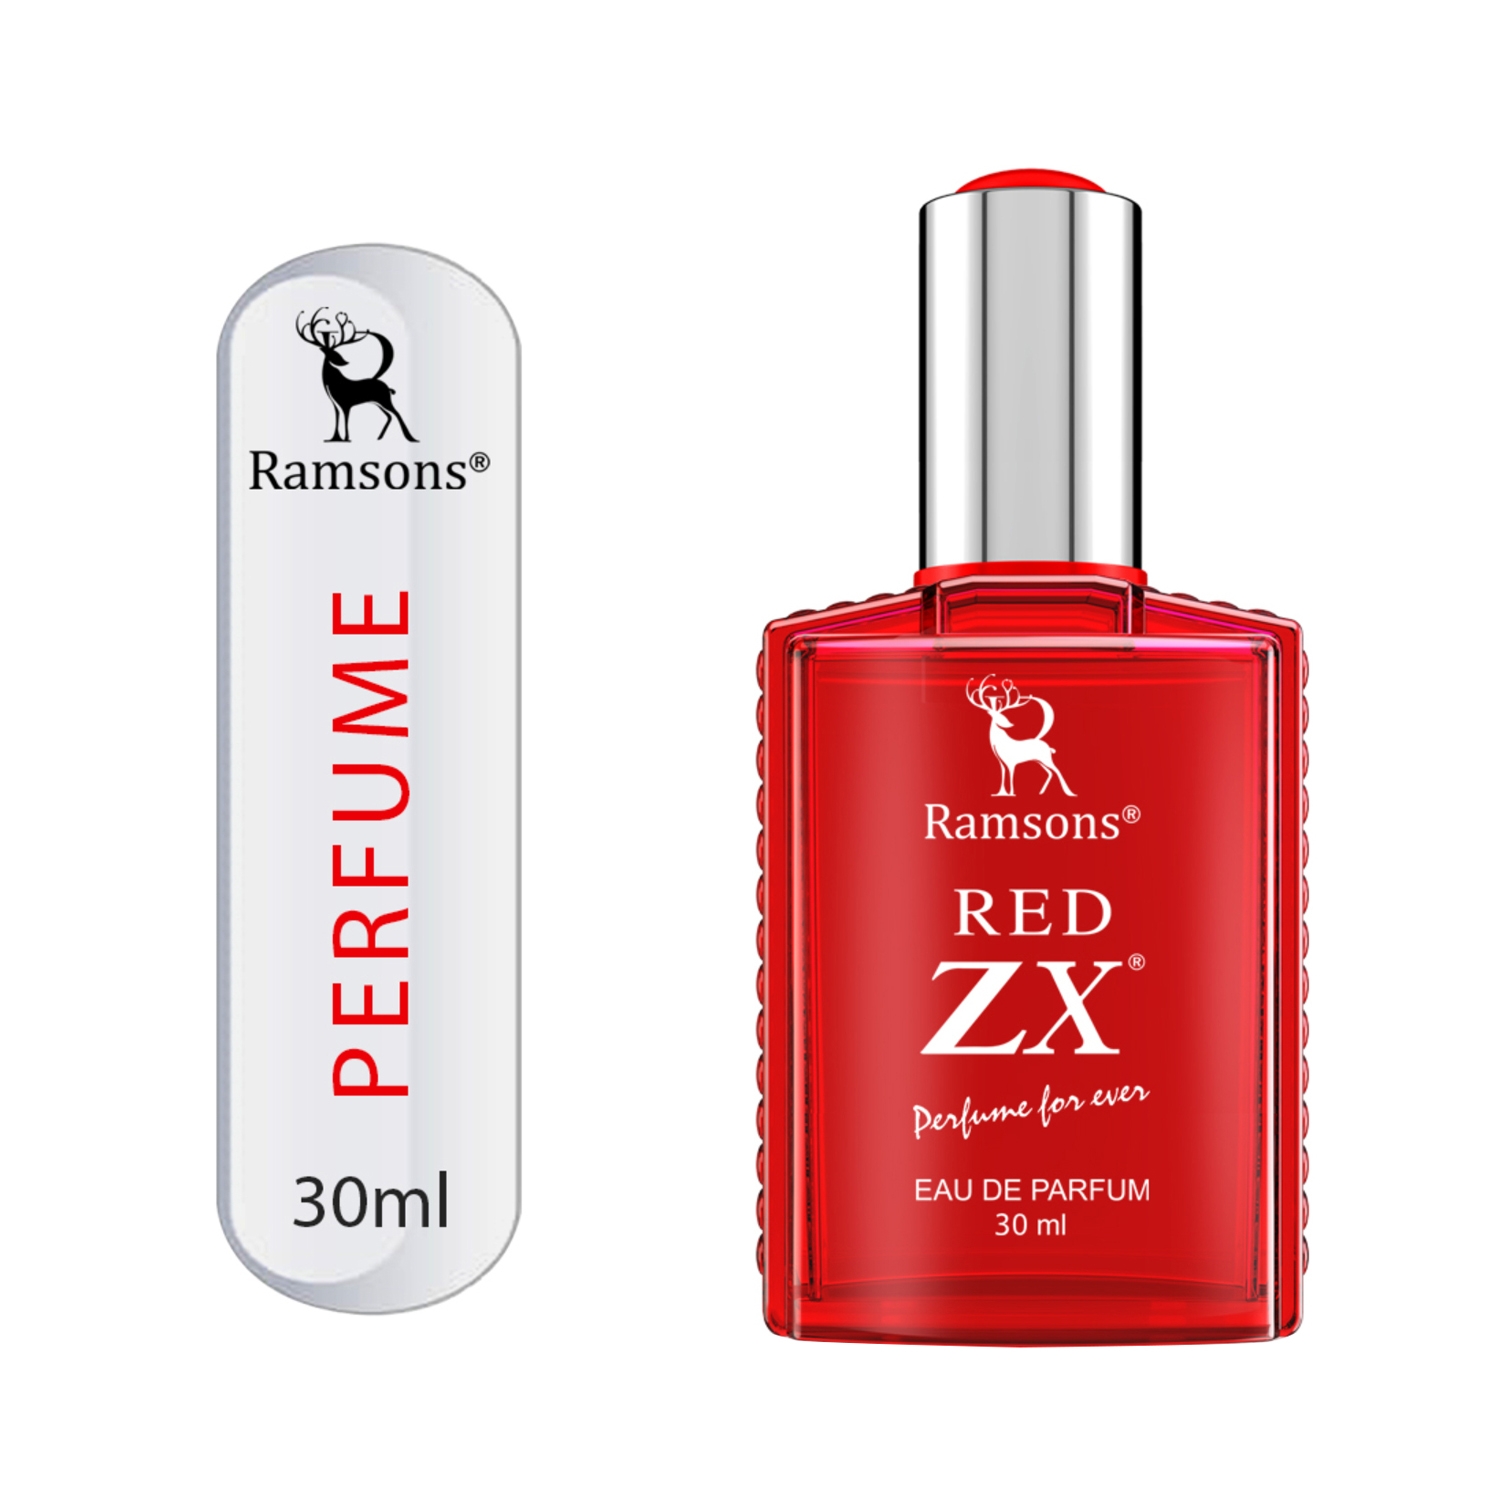 Ramsons Red Zx Eau De Parfum (30ml)